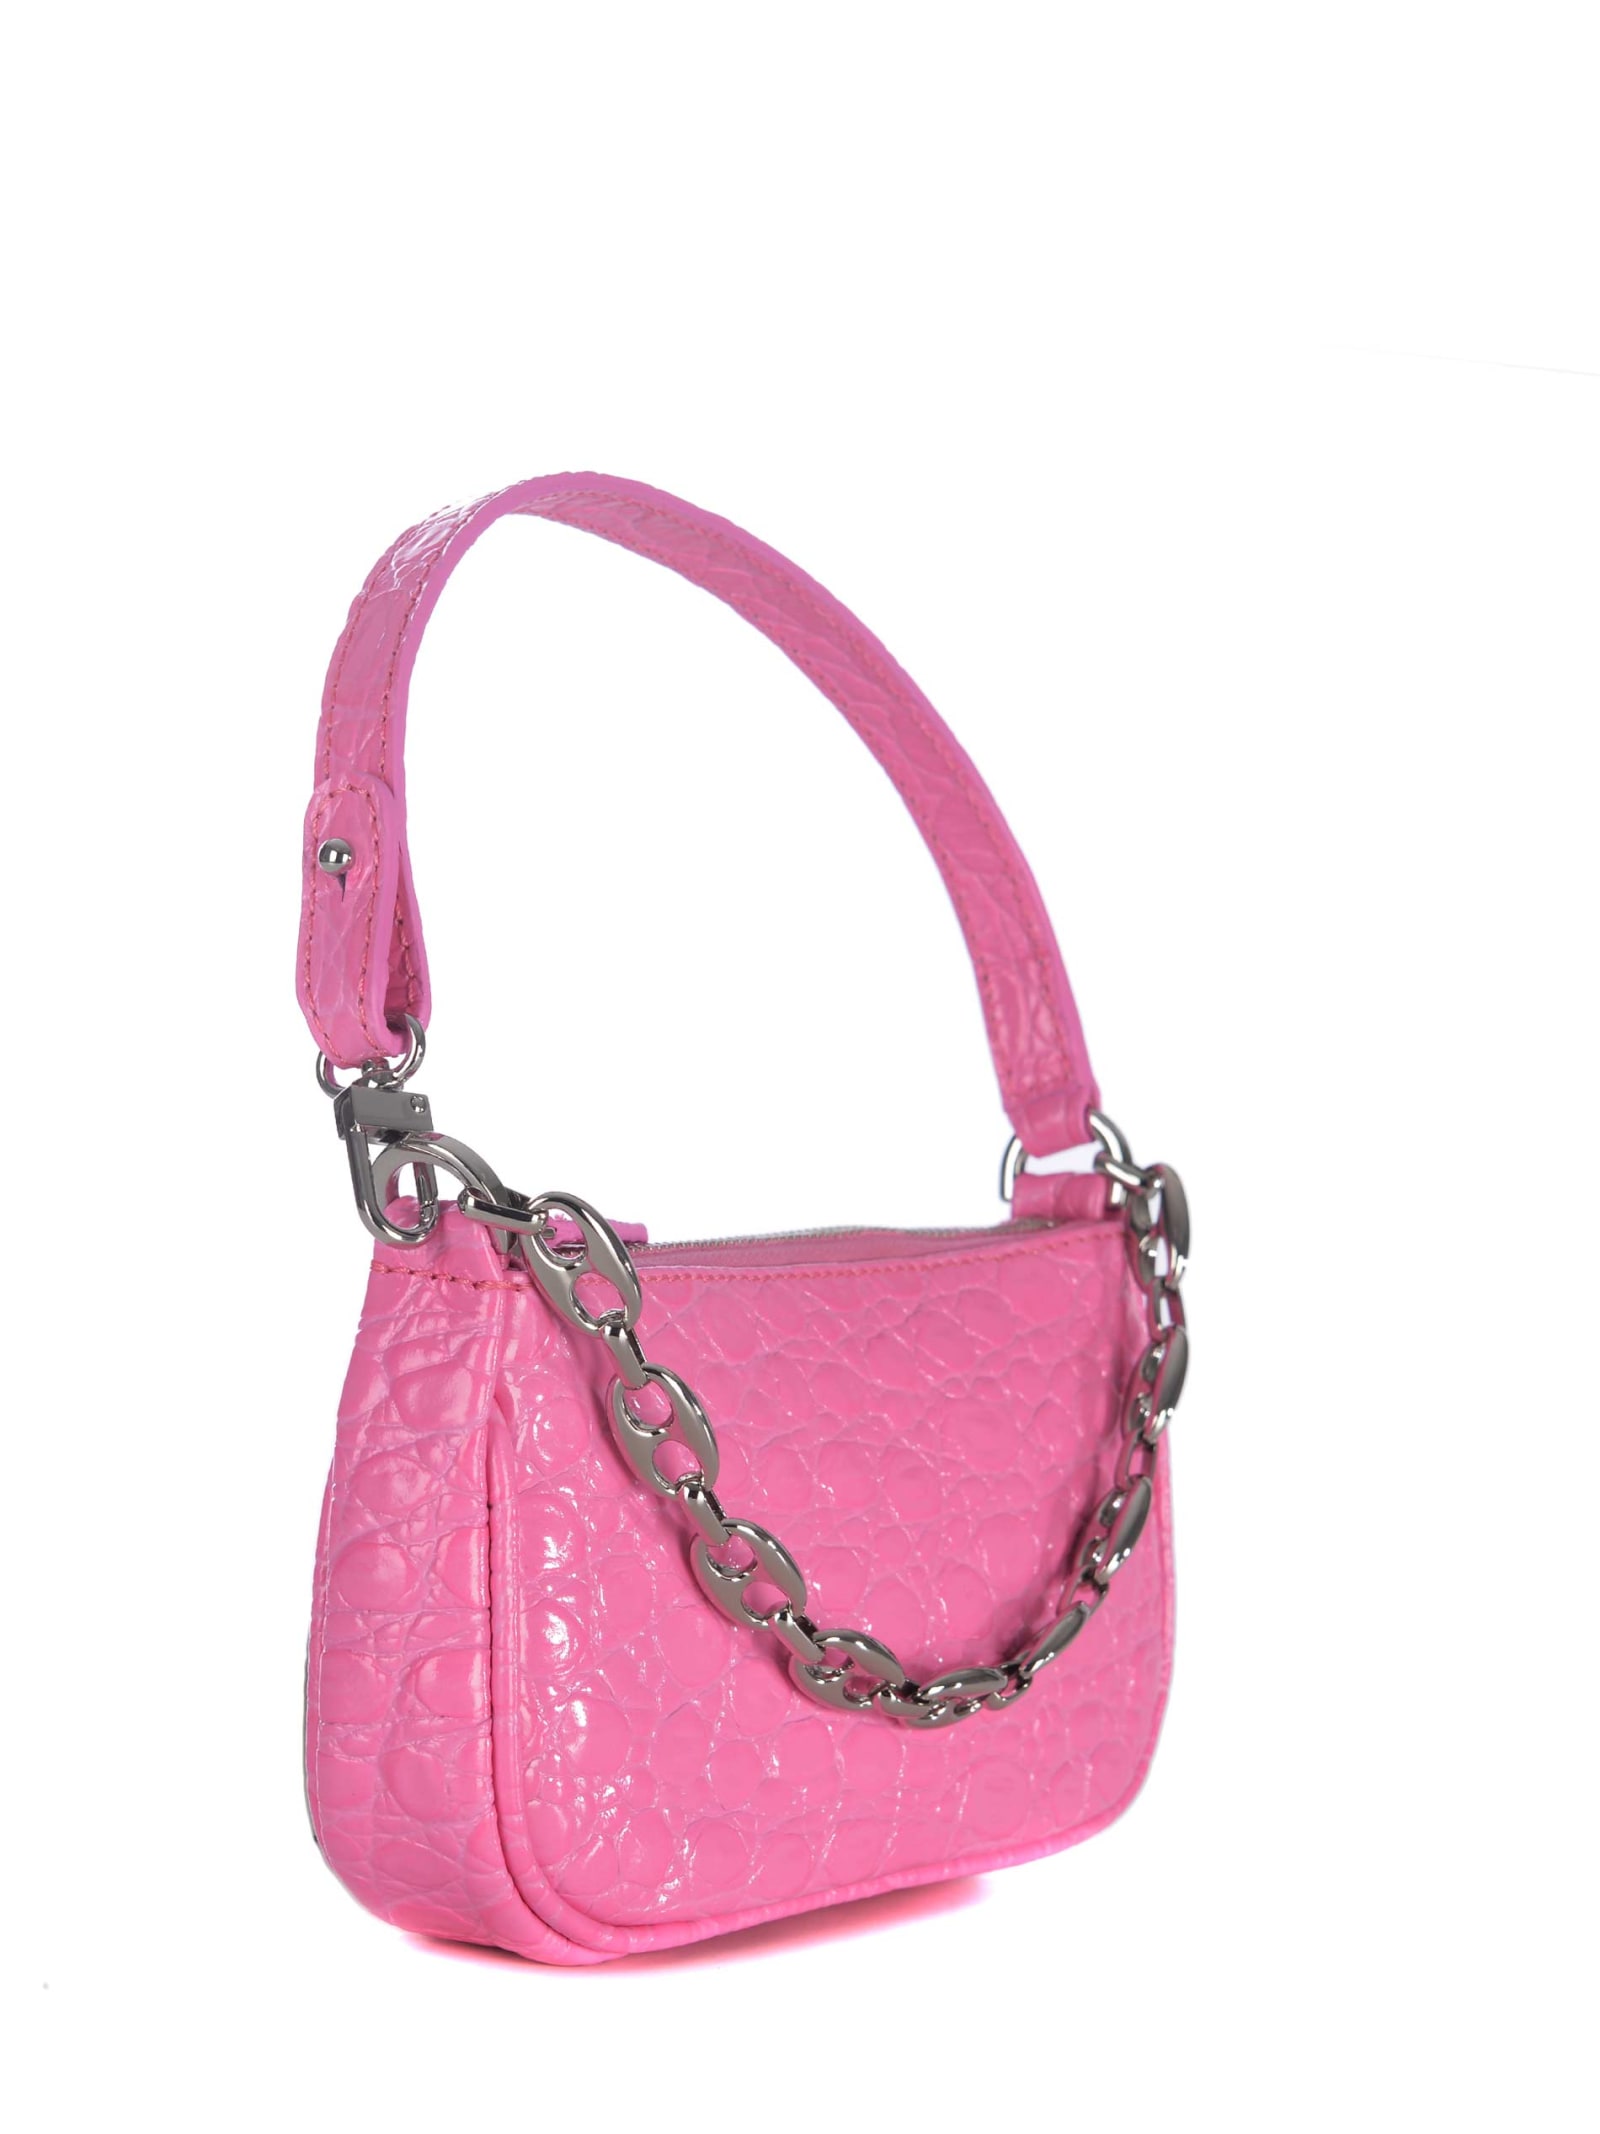 BY FAR Rachel Mini Shoulder Bag in Pink